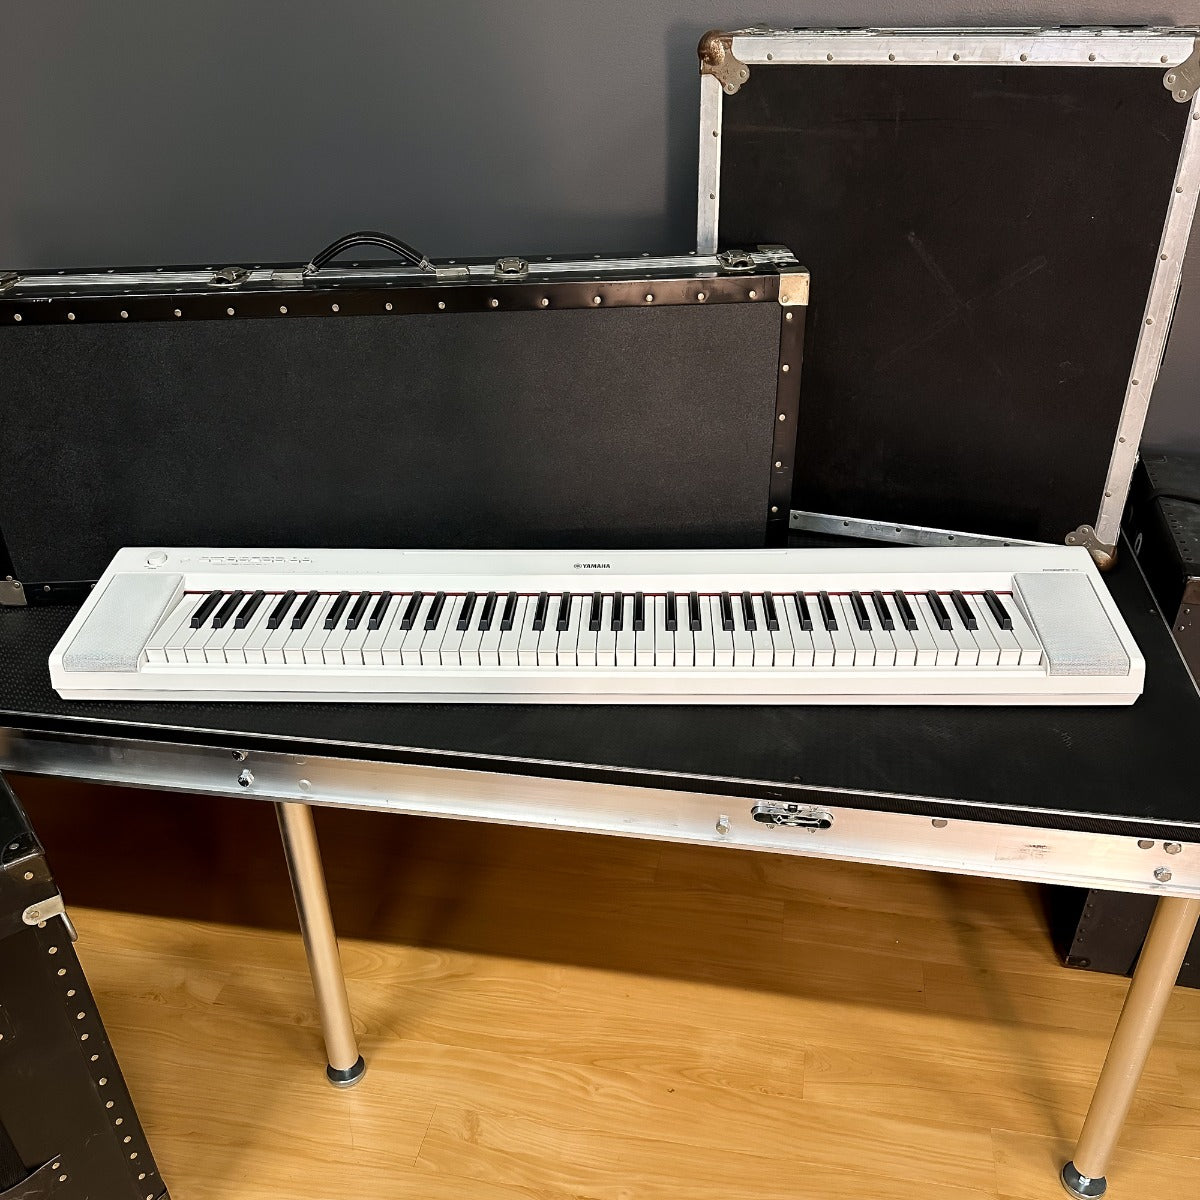 Yamaha Piaggero NP35 76-Key Portable Keyboard with Power Adapter - White, View 3